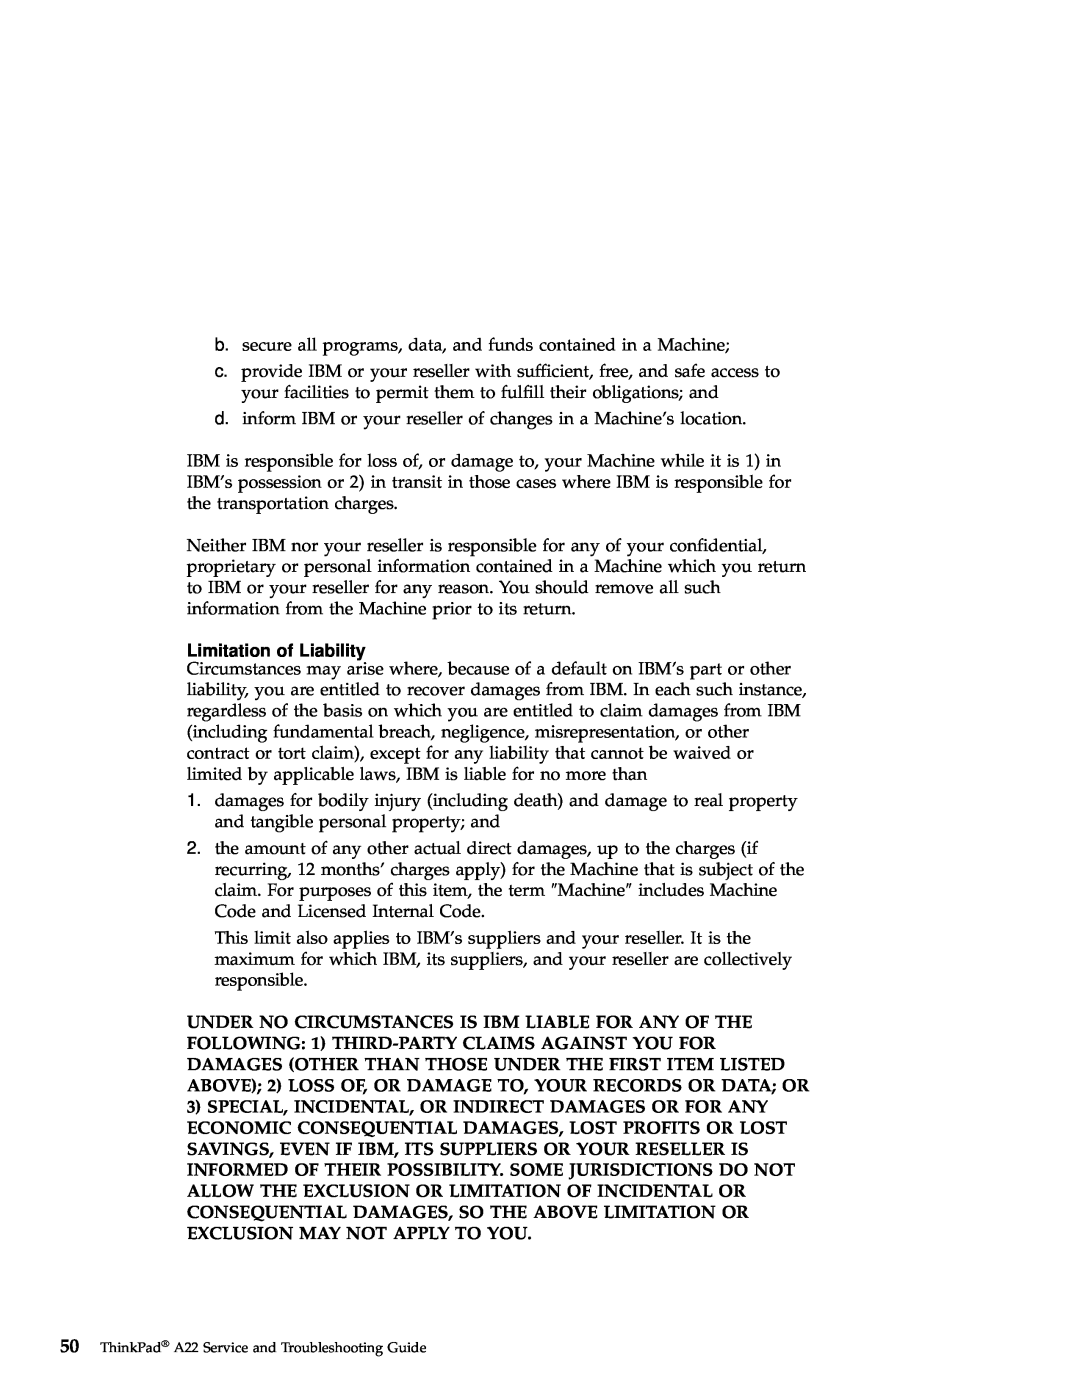 IBM A22 manual Limitation of Liability 